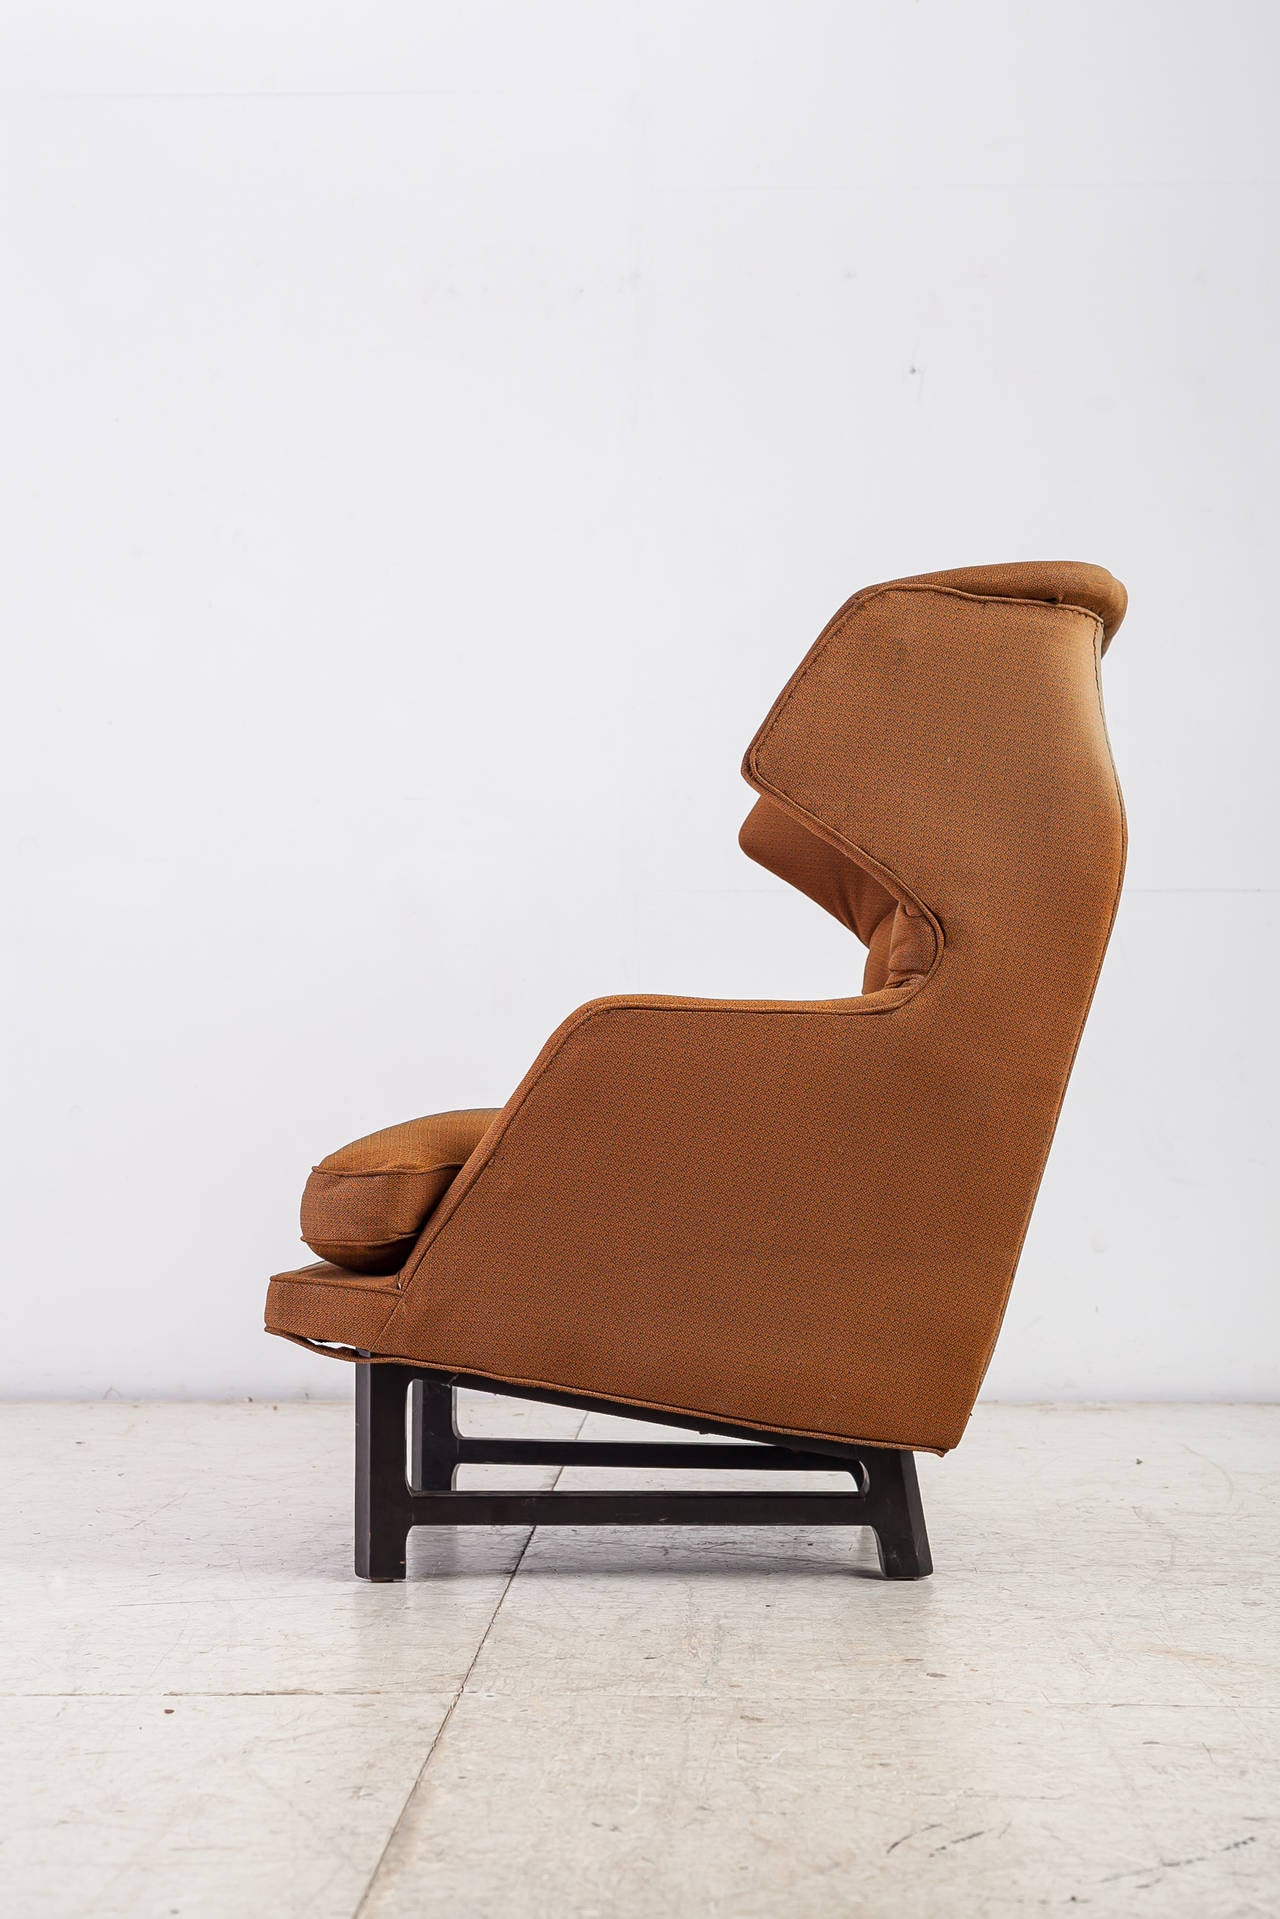 Fabric Edward Wormley Janus Wingback Lounge Chair for Dunbar For Sale